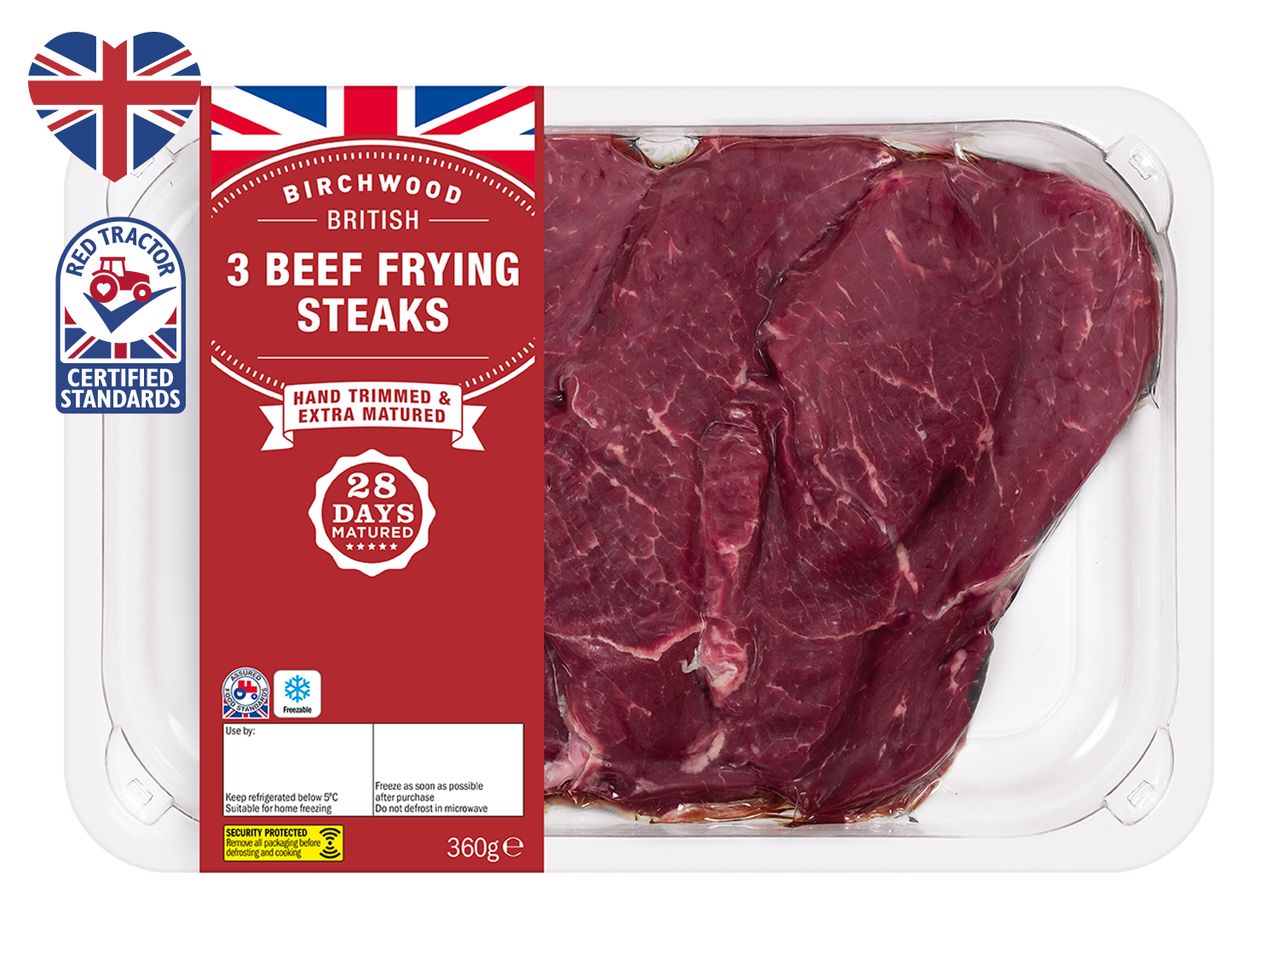 Go to full screen view: Birchwood British 3 Beef Frying Steaks - Image 1